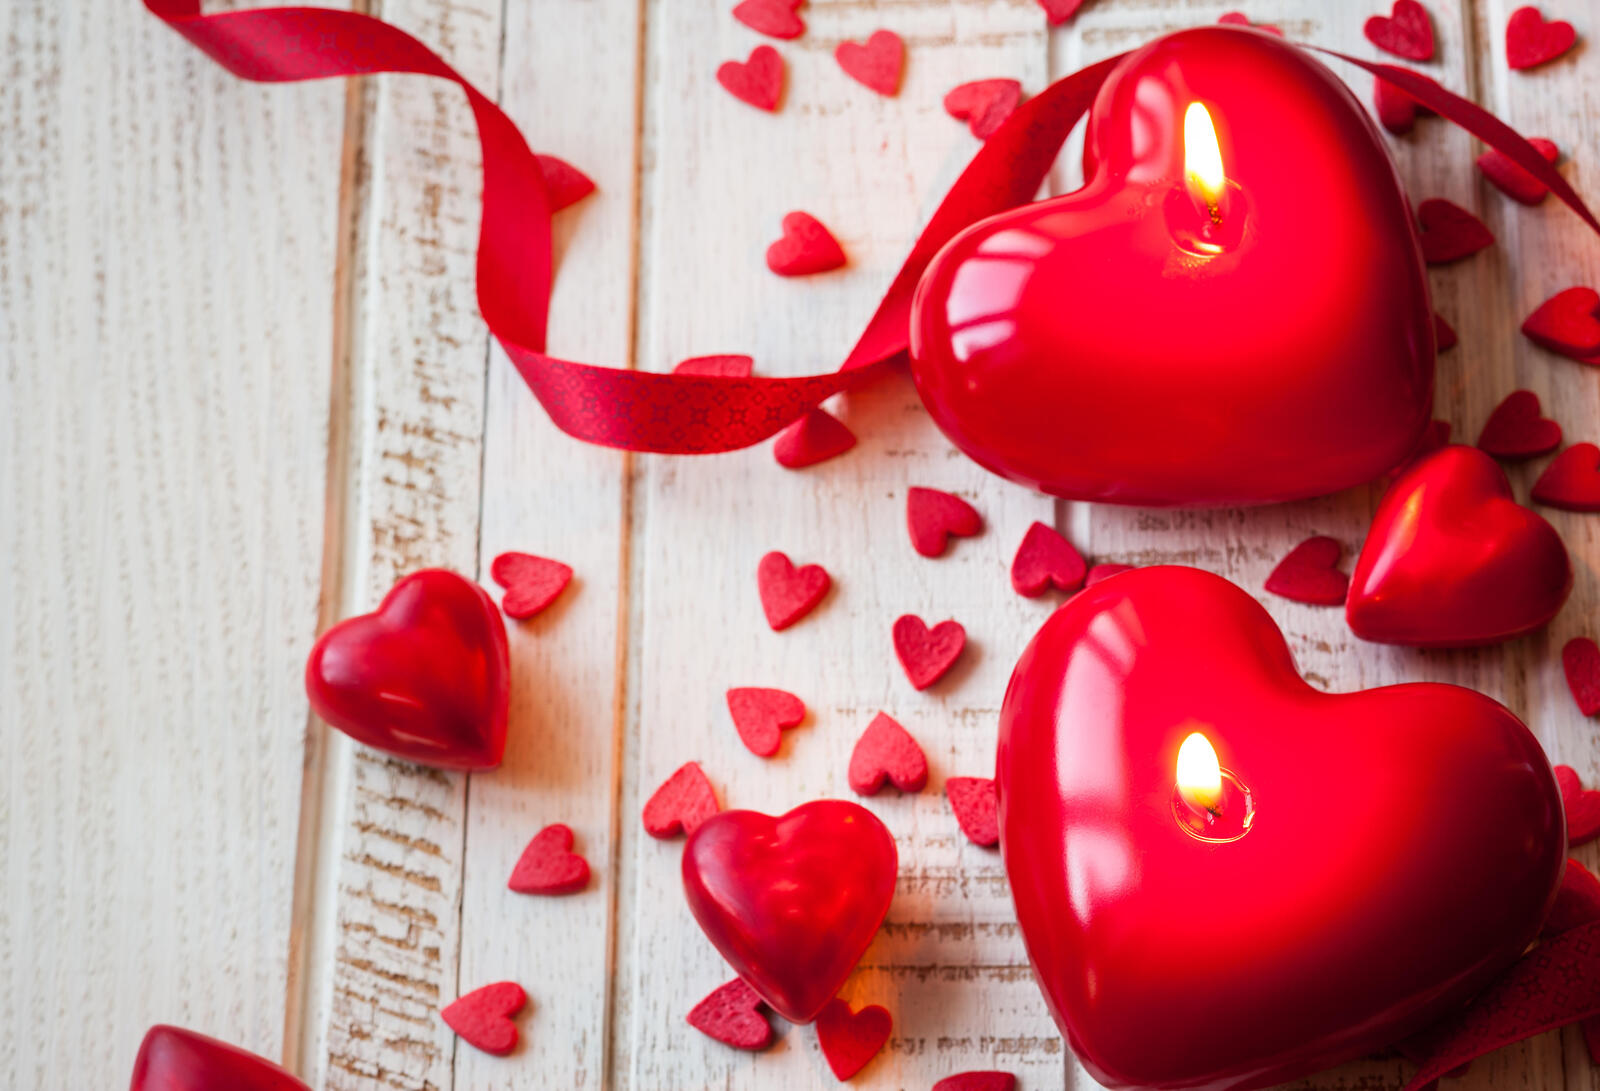 Wallpapers valentines Valentine day romance on the desktop